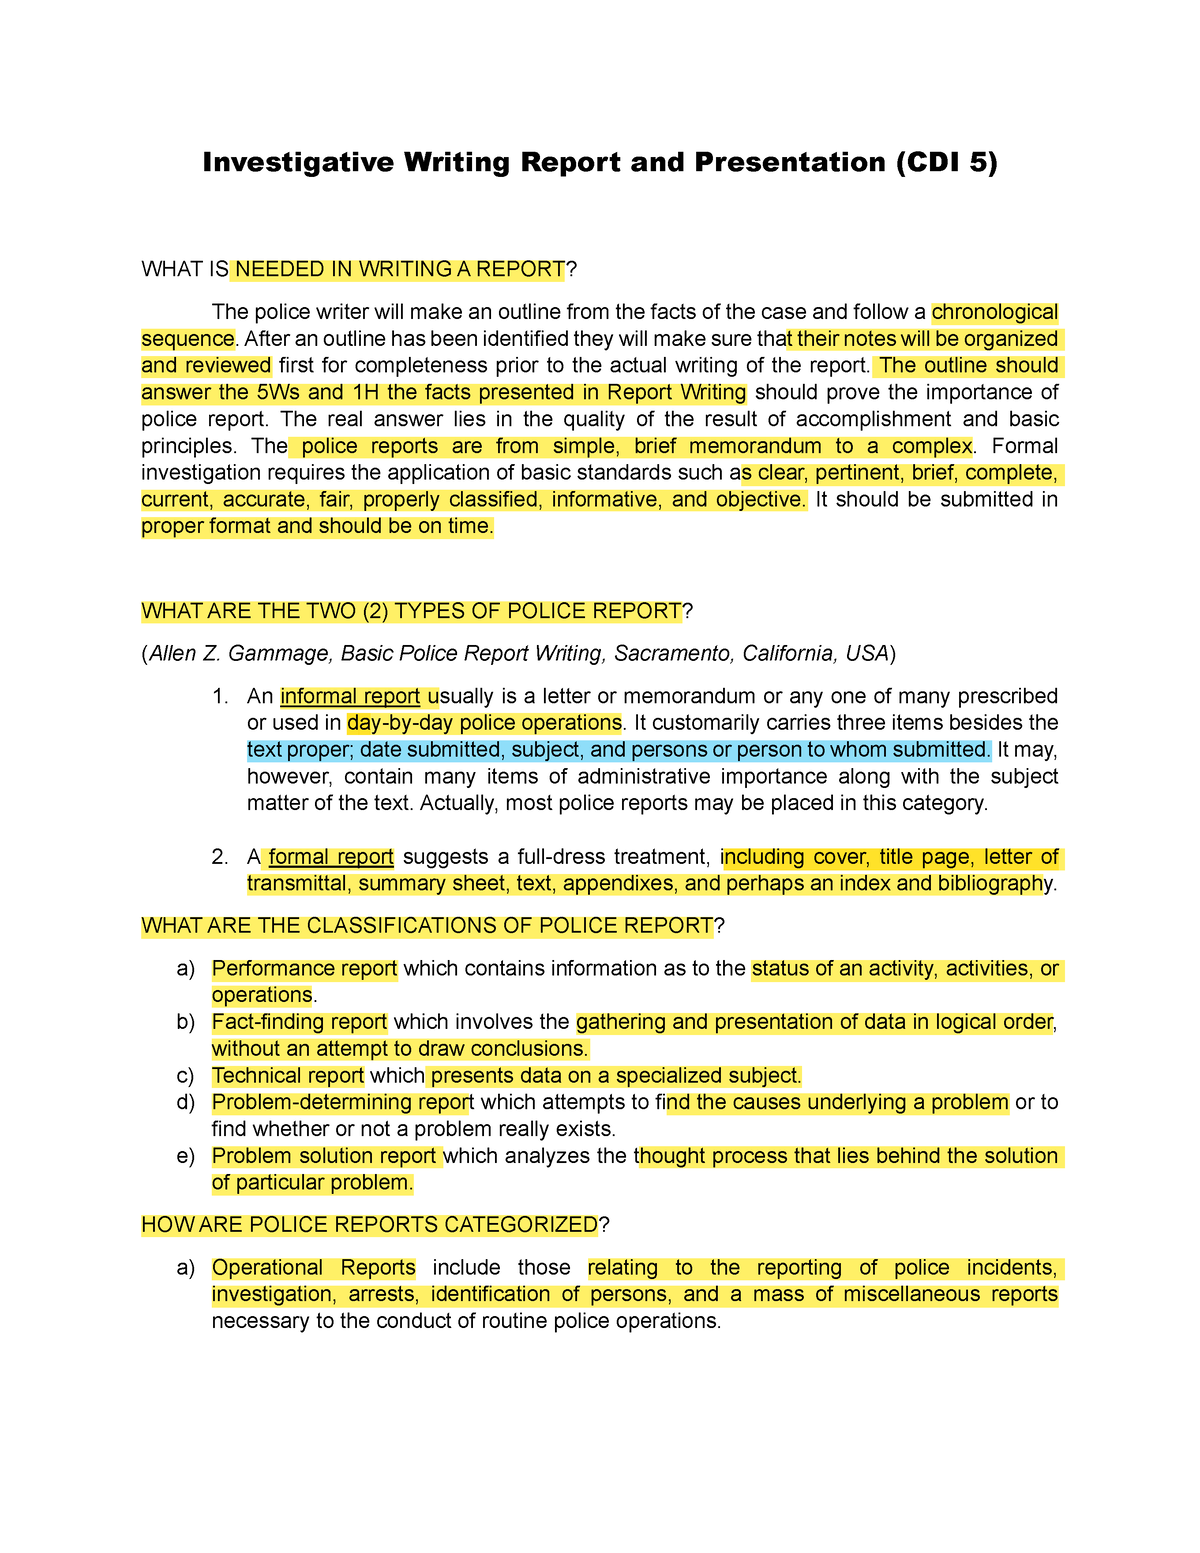 technical english 1 (investigative report writing and presentation pdf)